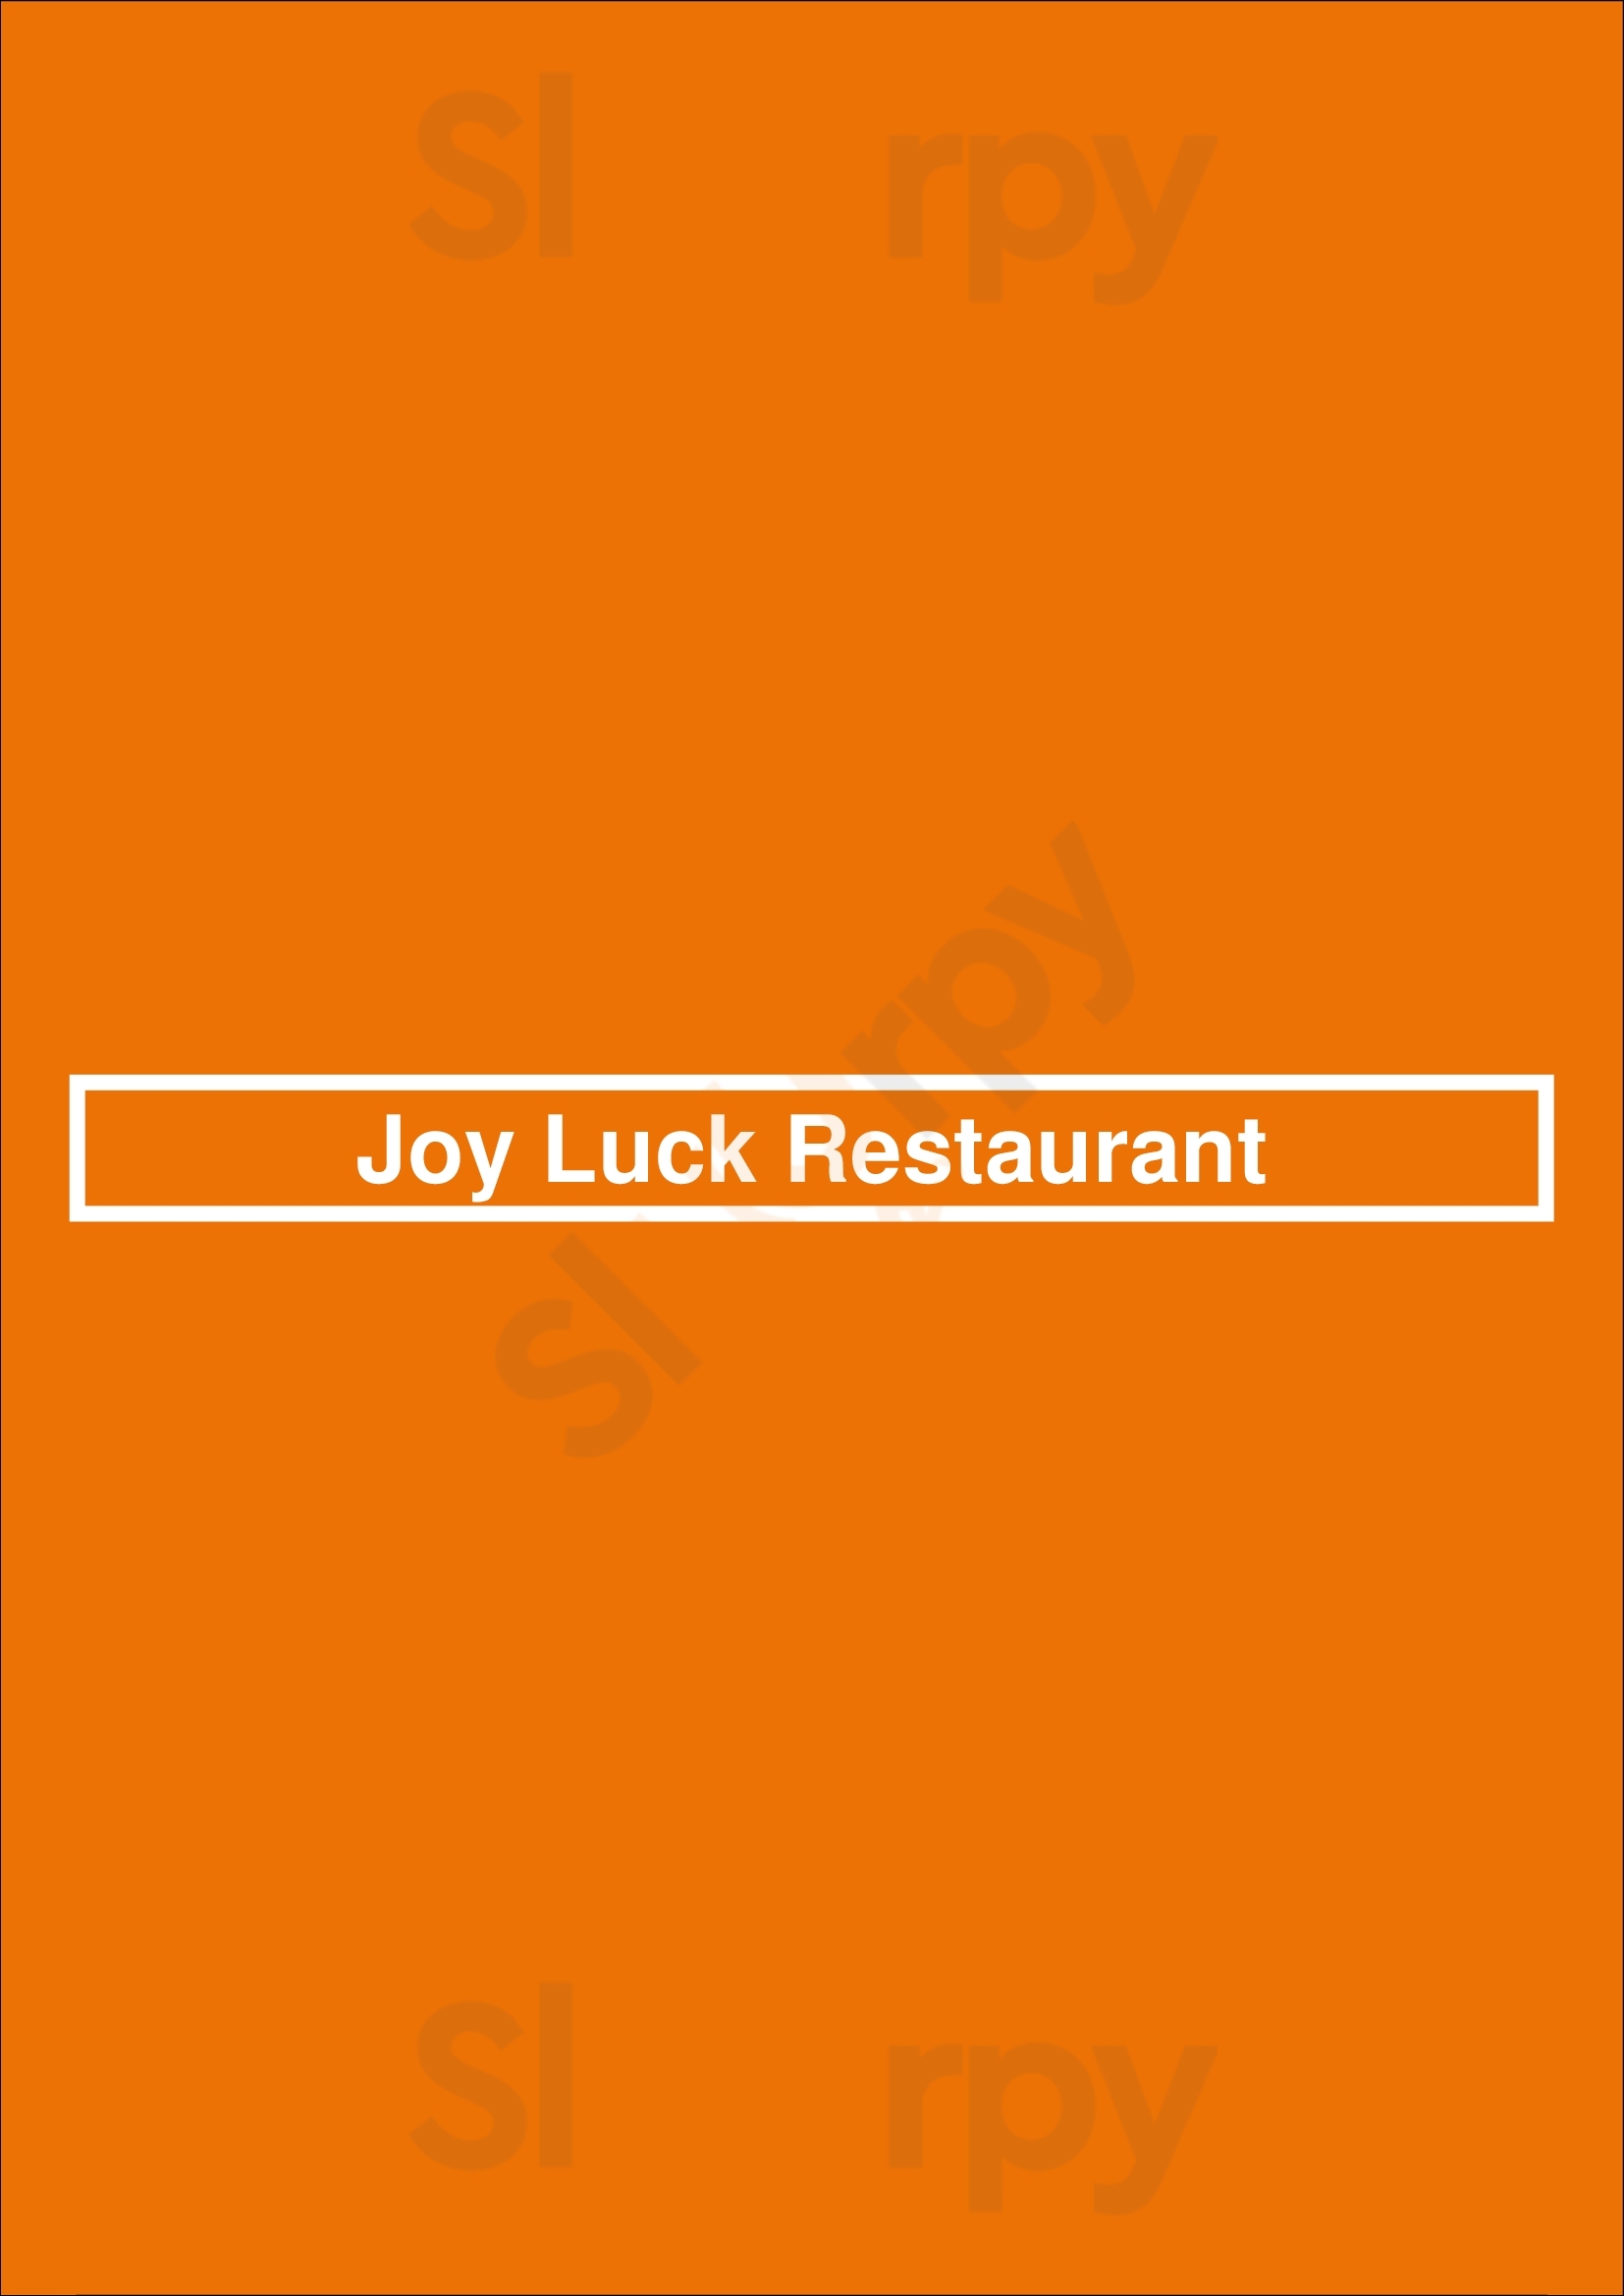 Joy Luck Restaurant Lake Worth Menu - 1